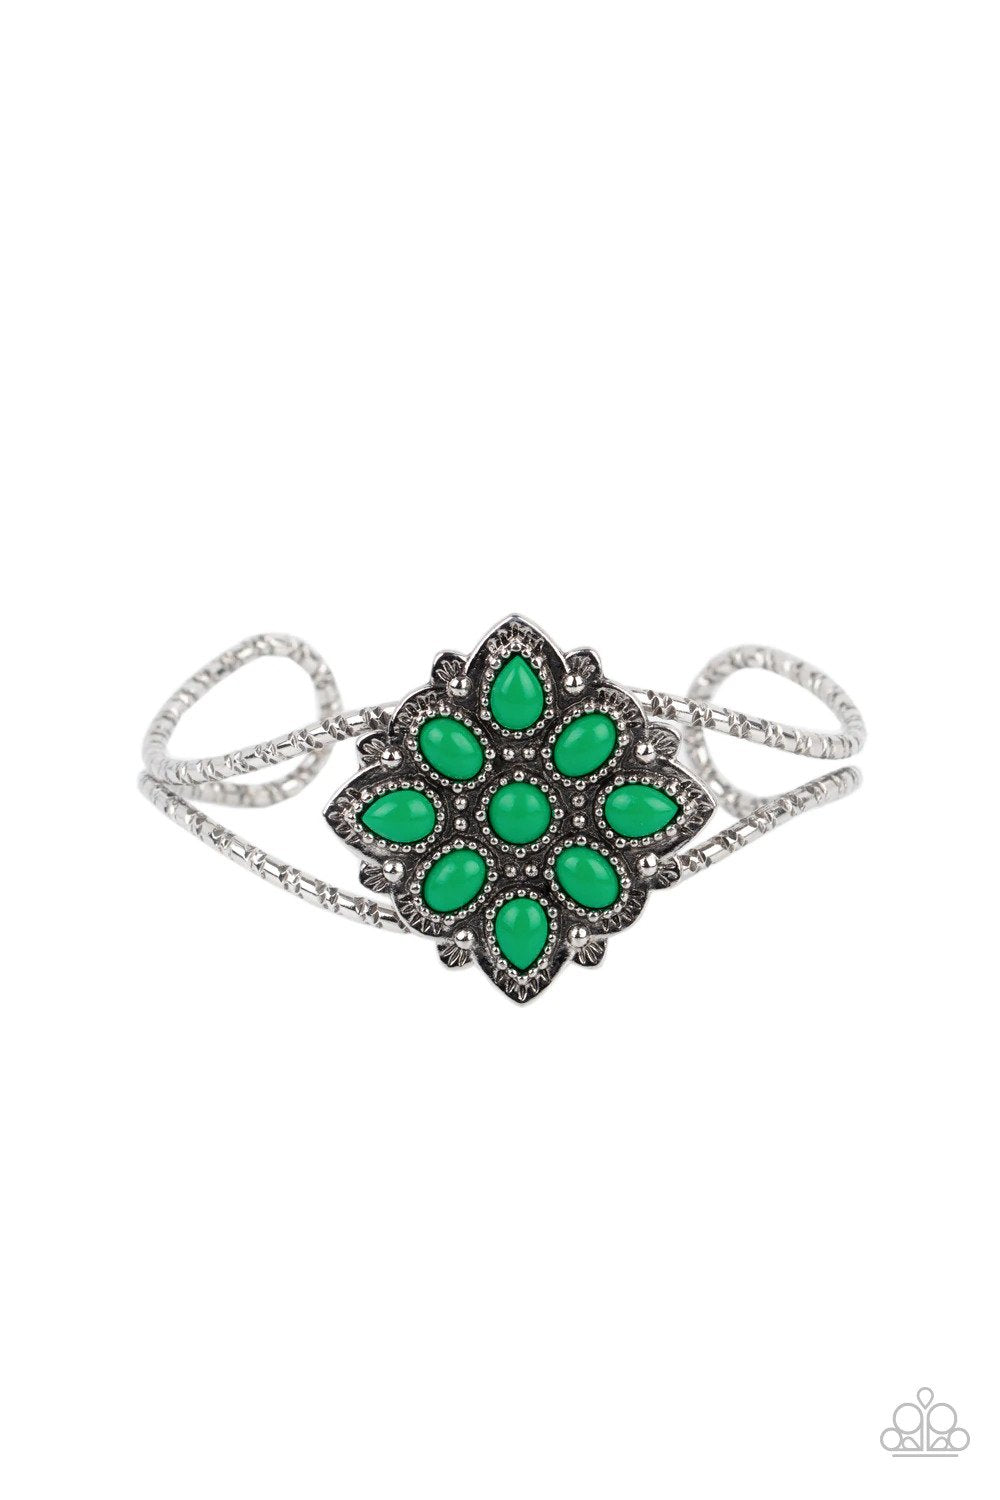 Happliy Ever APPLIQUE Green Bracelet - Paparazzi Accessories- lightbox - CarasShop.com - $5 Jewelry by Cara Jewels